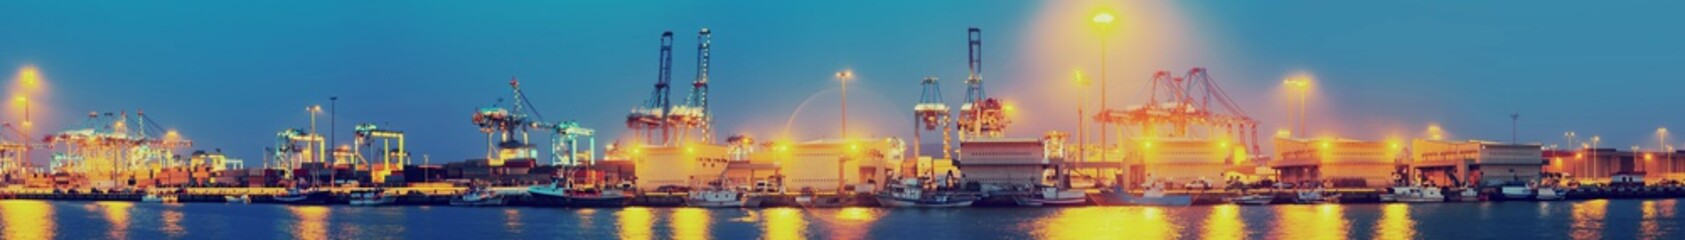 night panorama of Industrial port of Algeciras